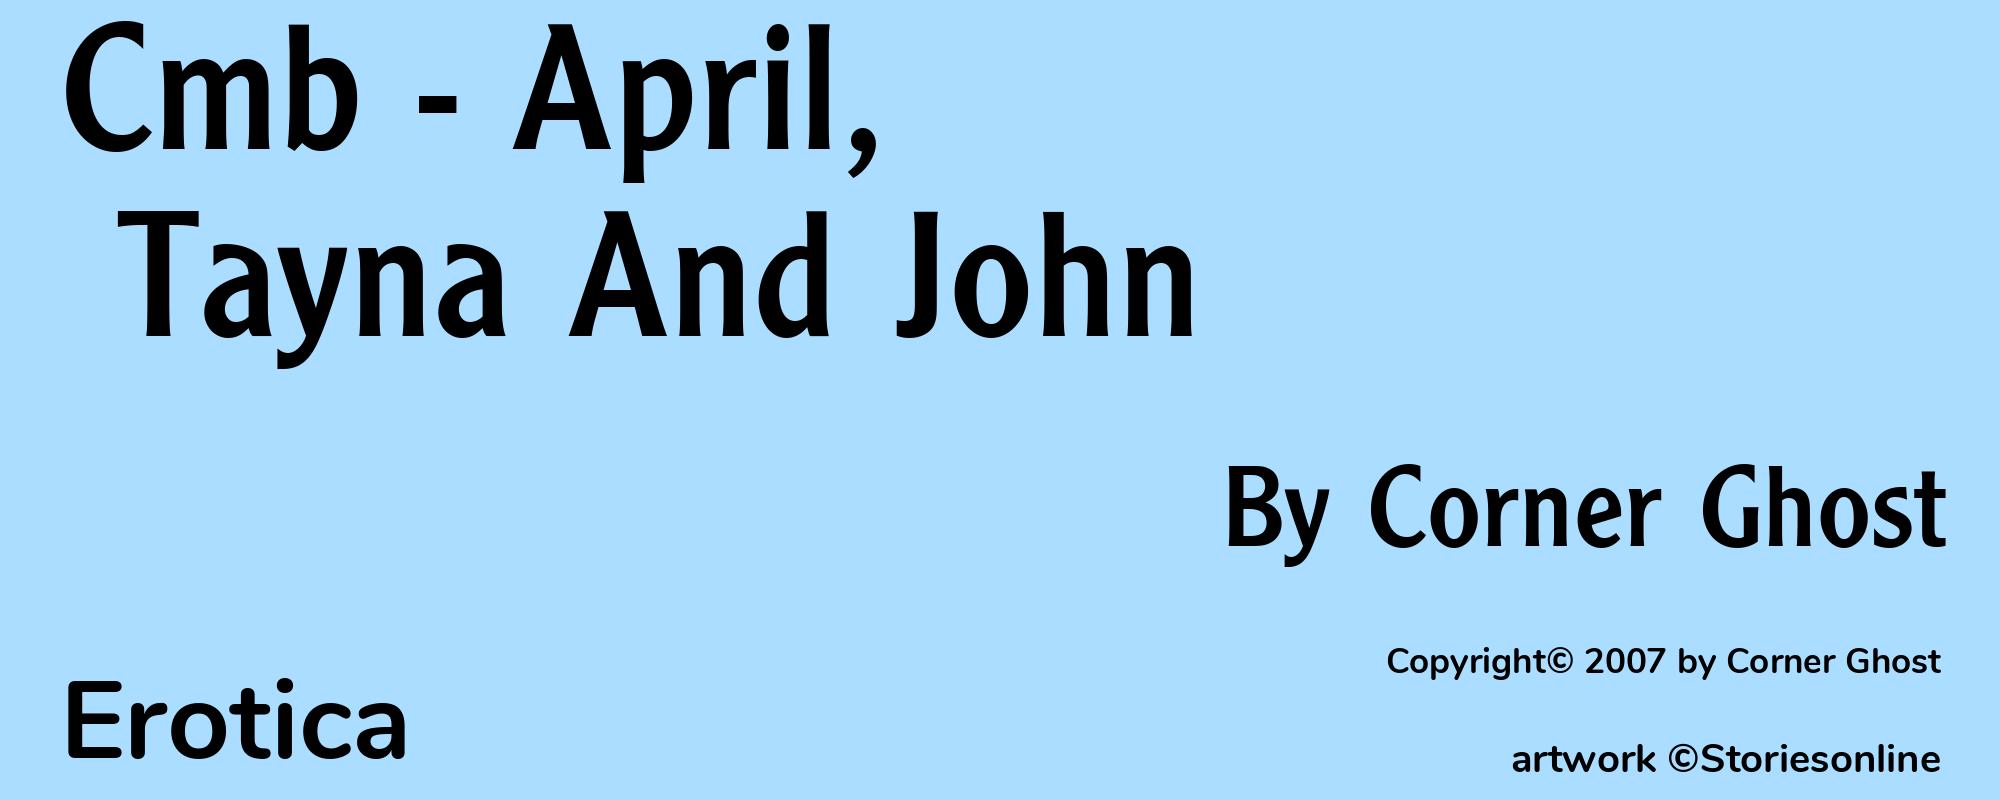 Cmb - April, Tayna And John - Cover